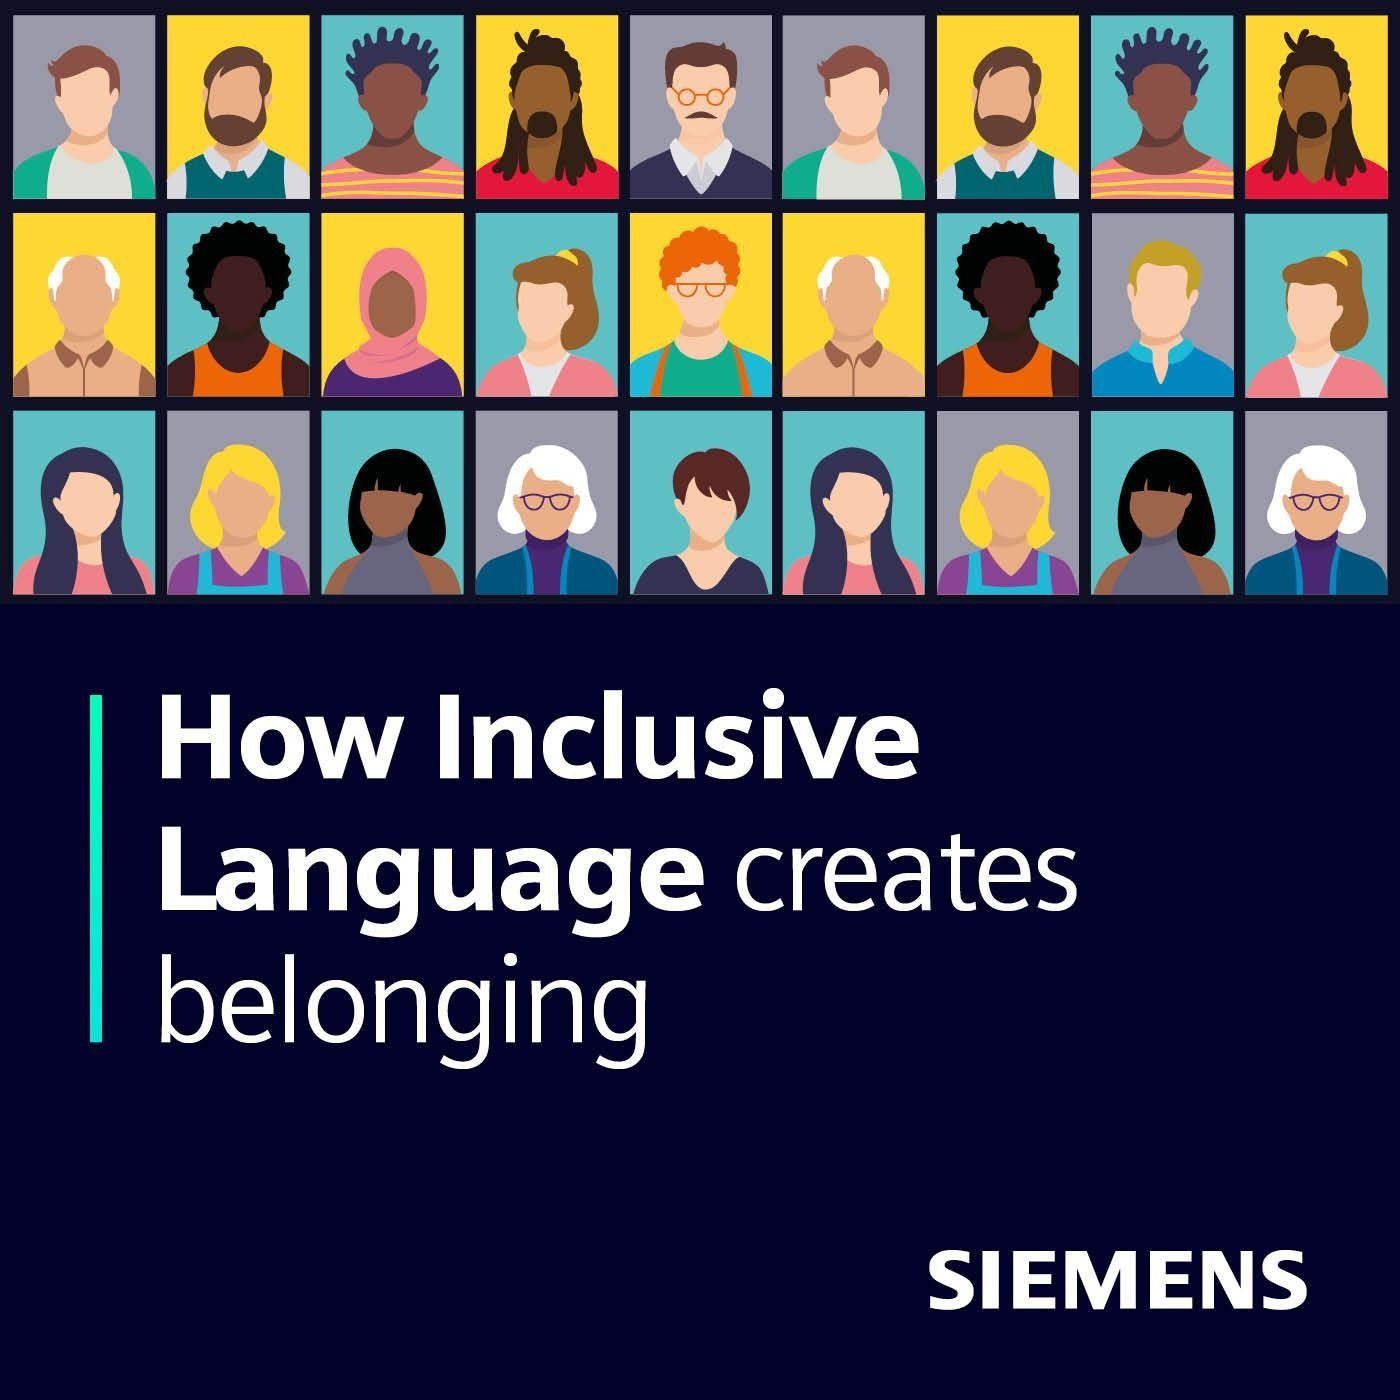 How inclusive language creates belonging